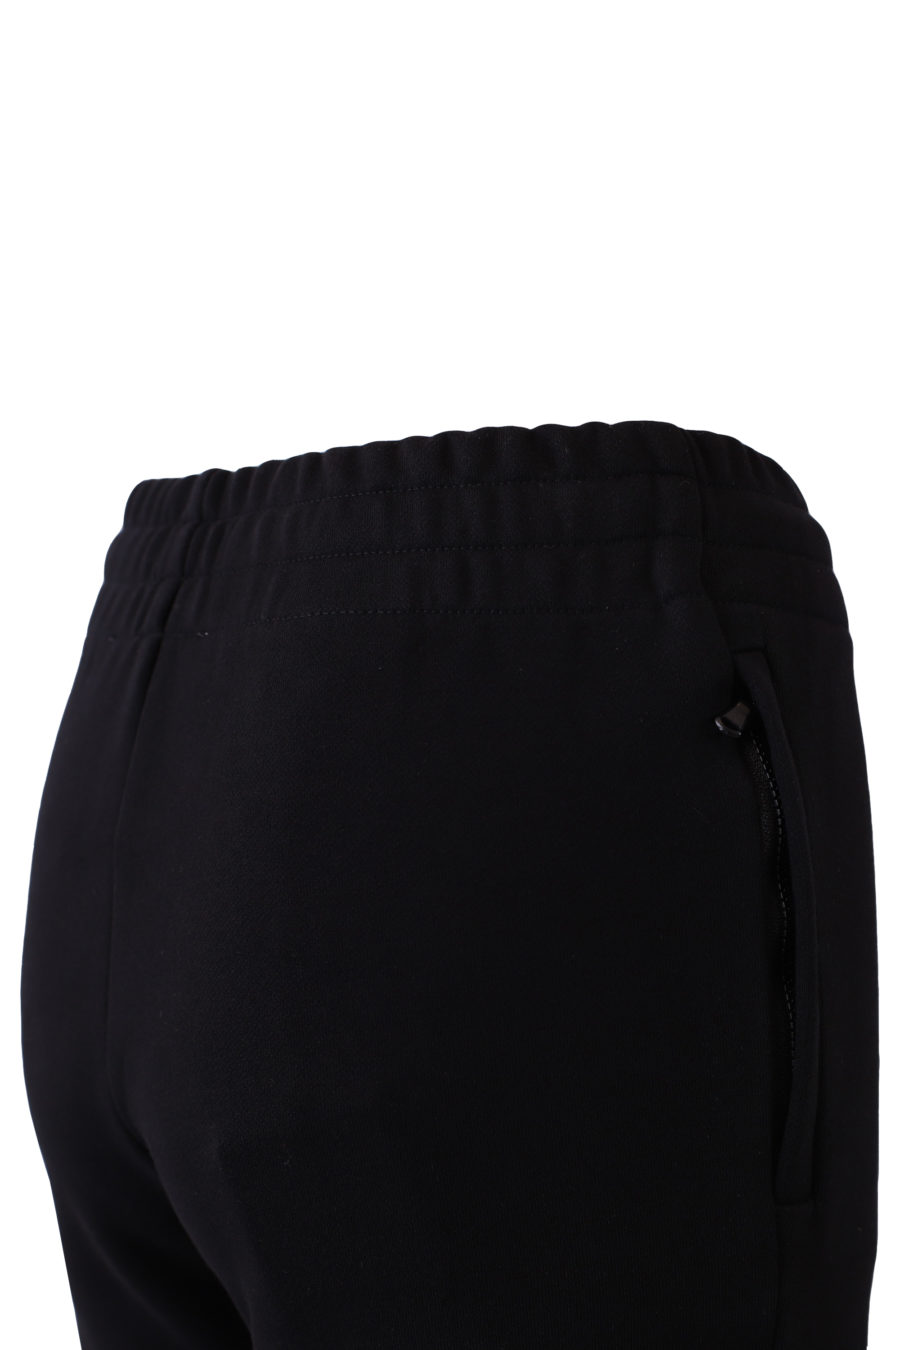 Black trousers with crystals logo - eb8451bb1830d25492436fae4e416c75e2dd0e40